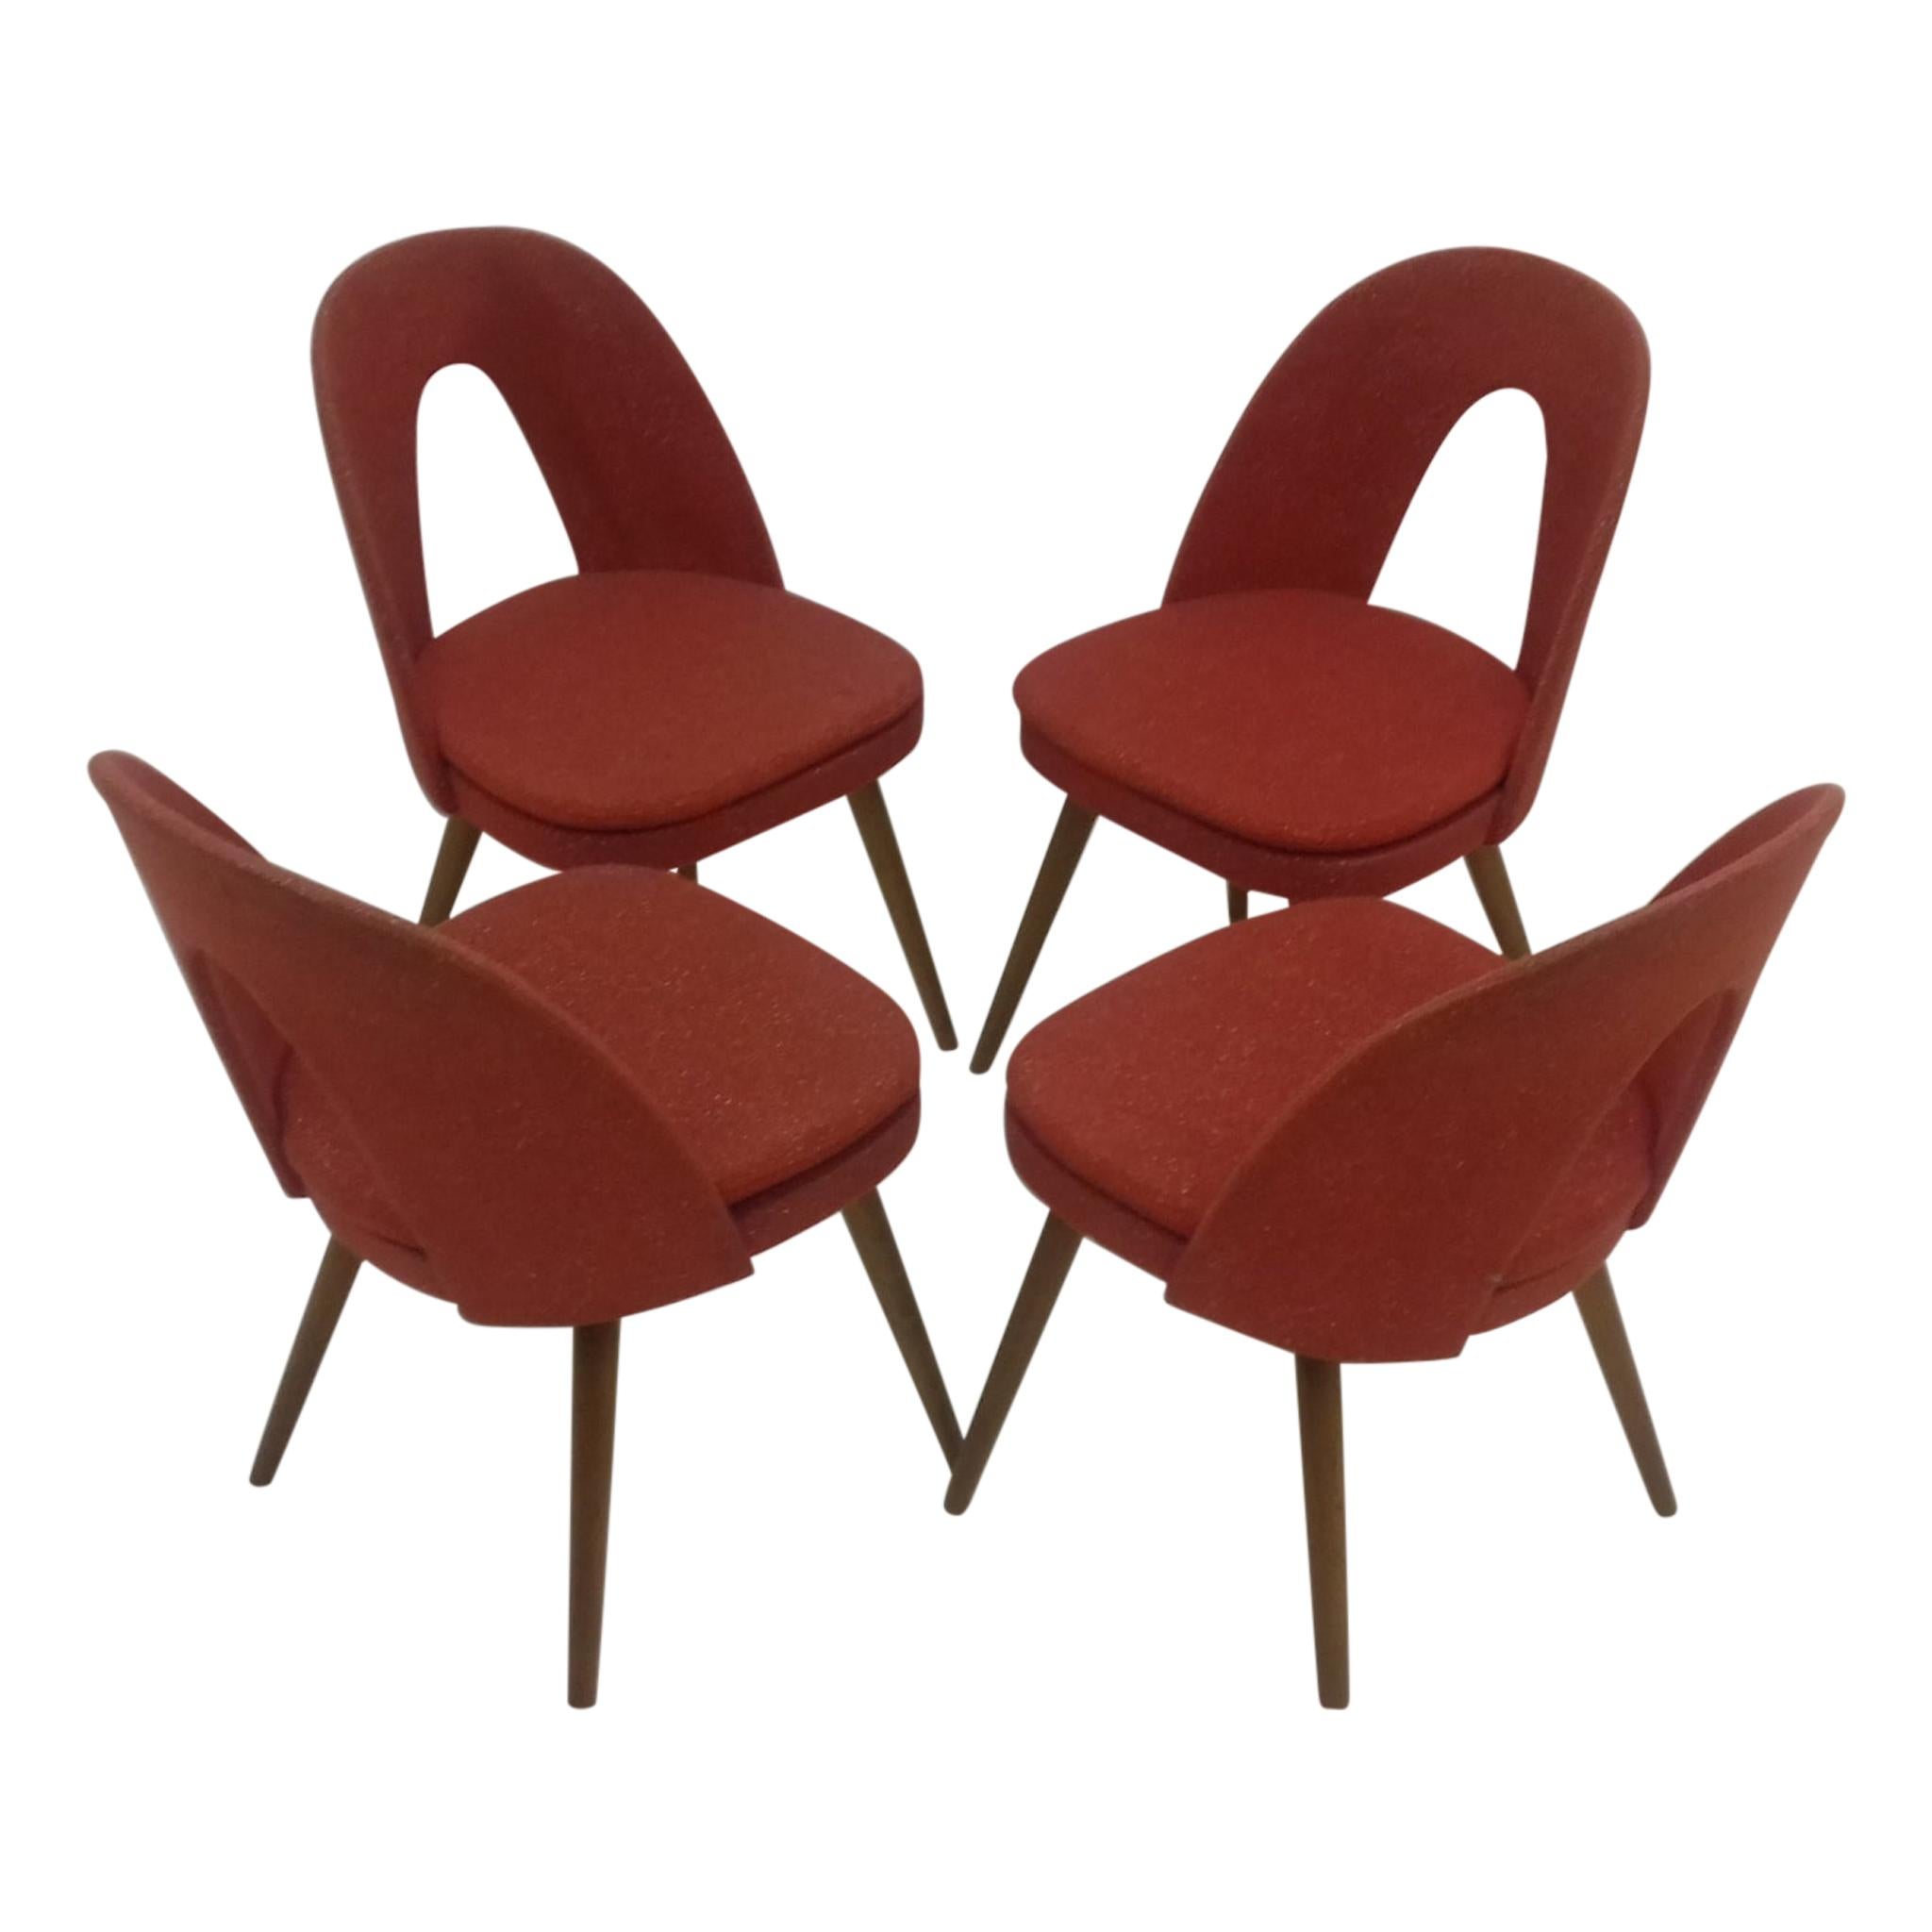 Set of Four Design Dining Chairs Designed by Antonín Šuman, 1960s